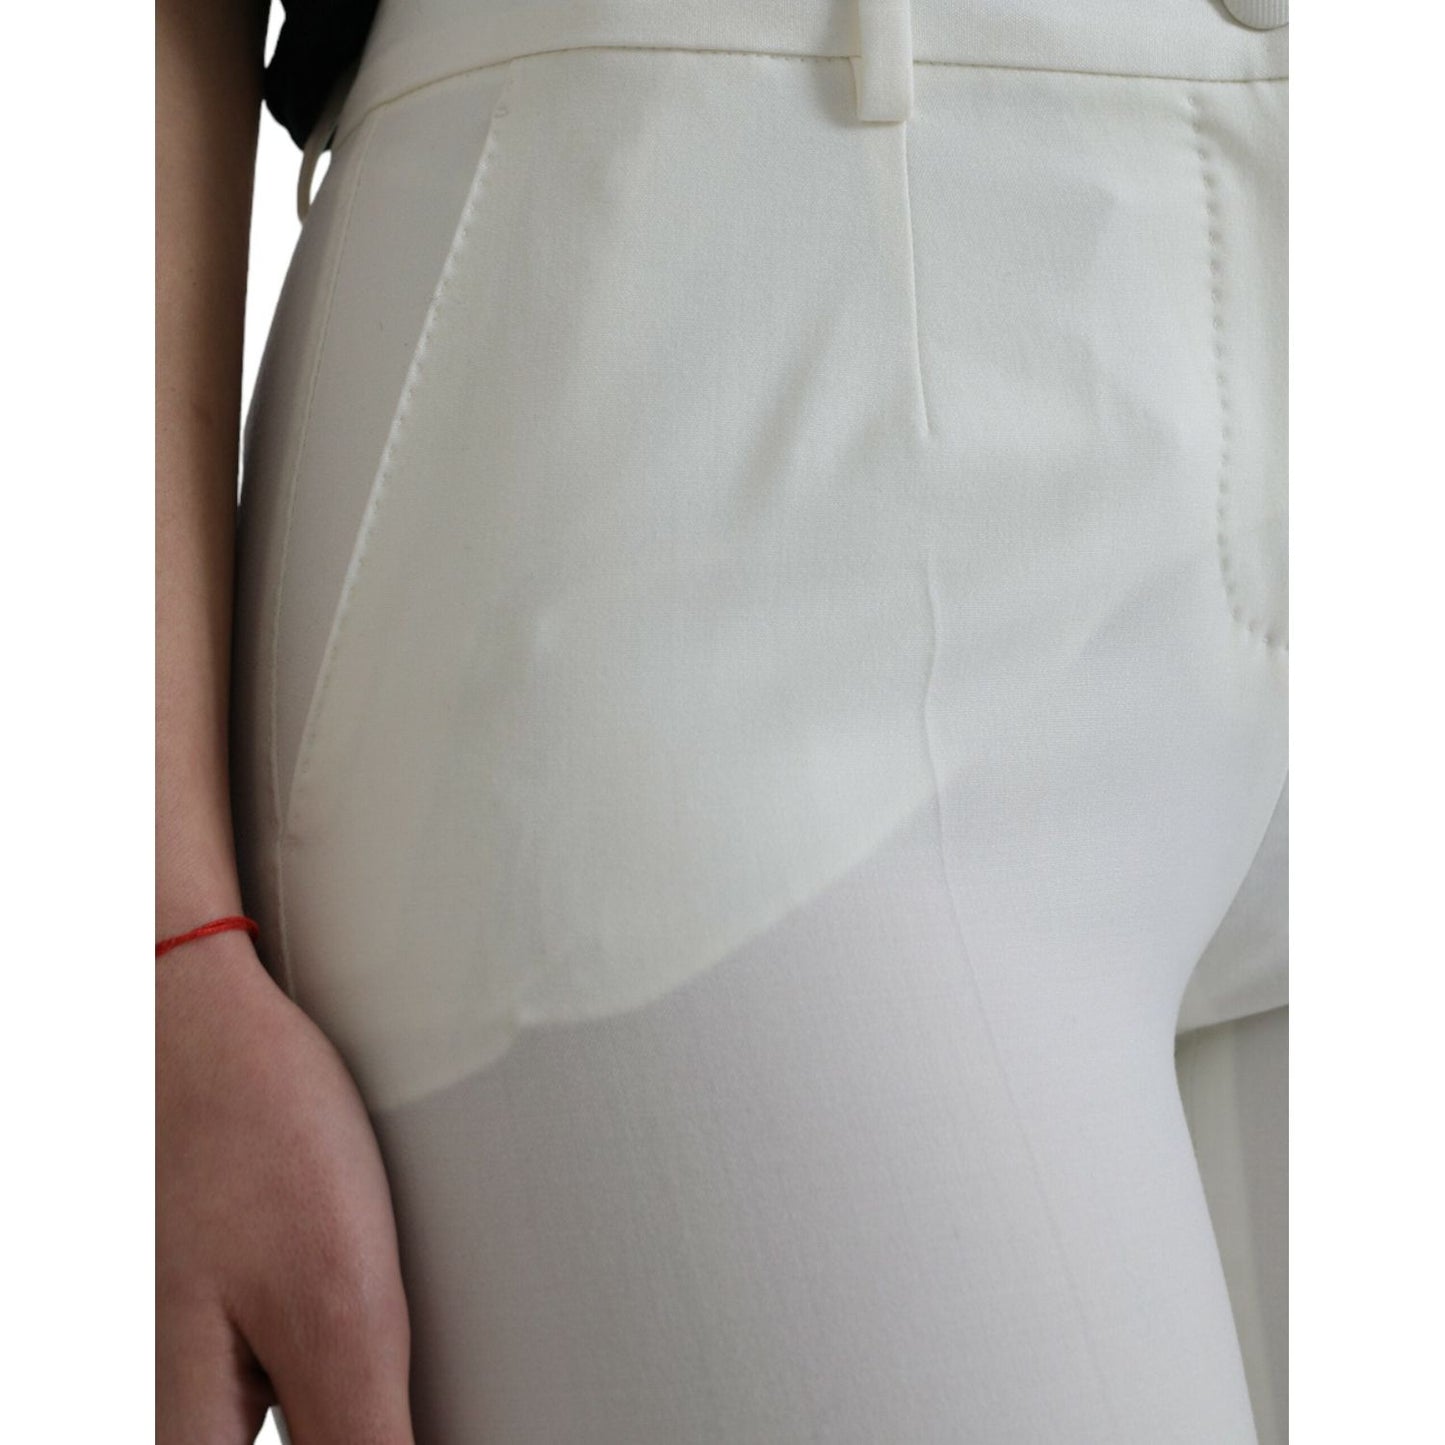 Dolce & Gabbana Elegant White Mid-Waist Tapered Pants elegant-white-mid-waist-tapered-pants